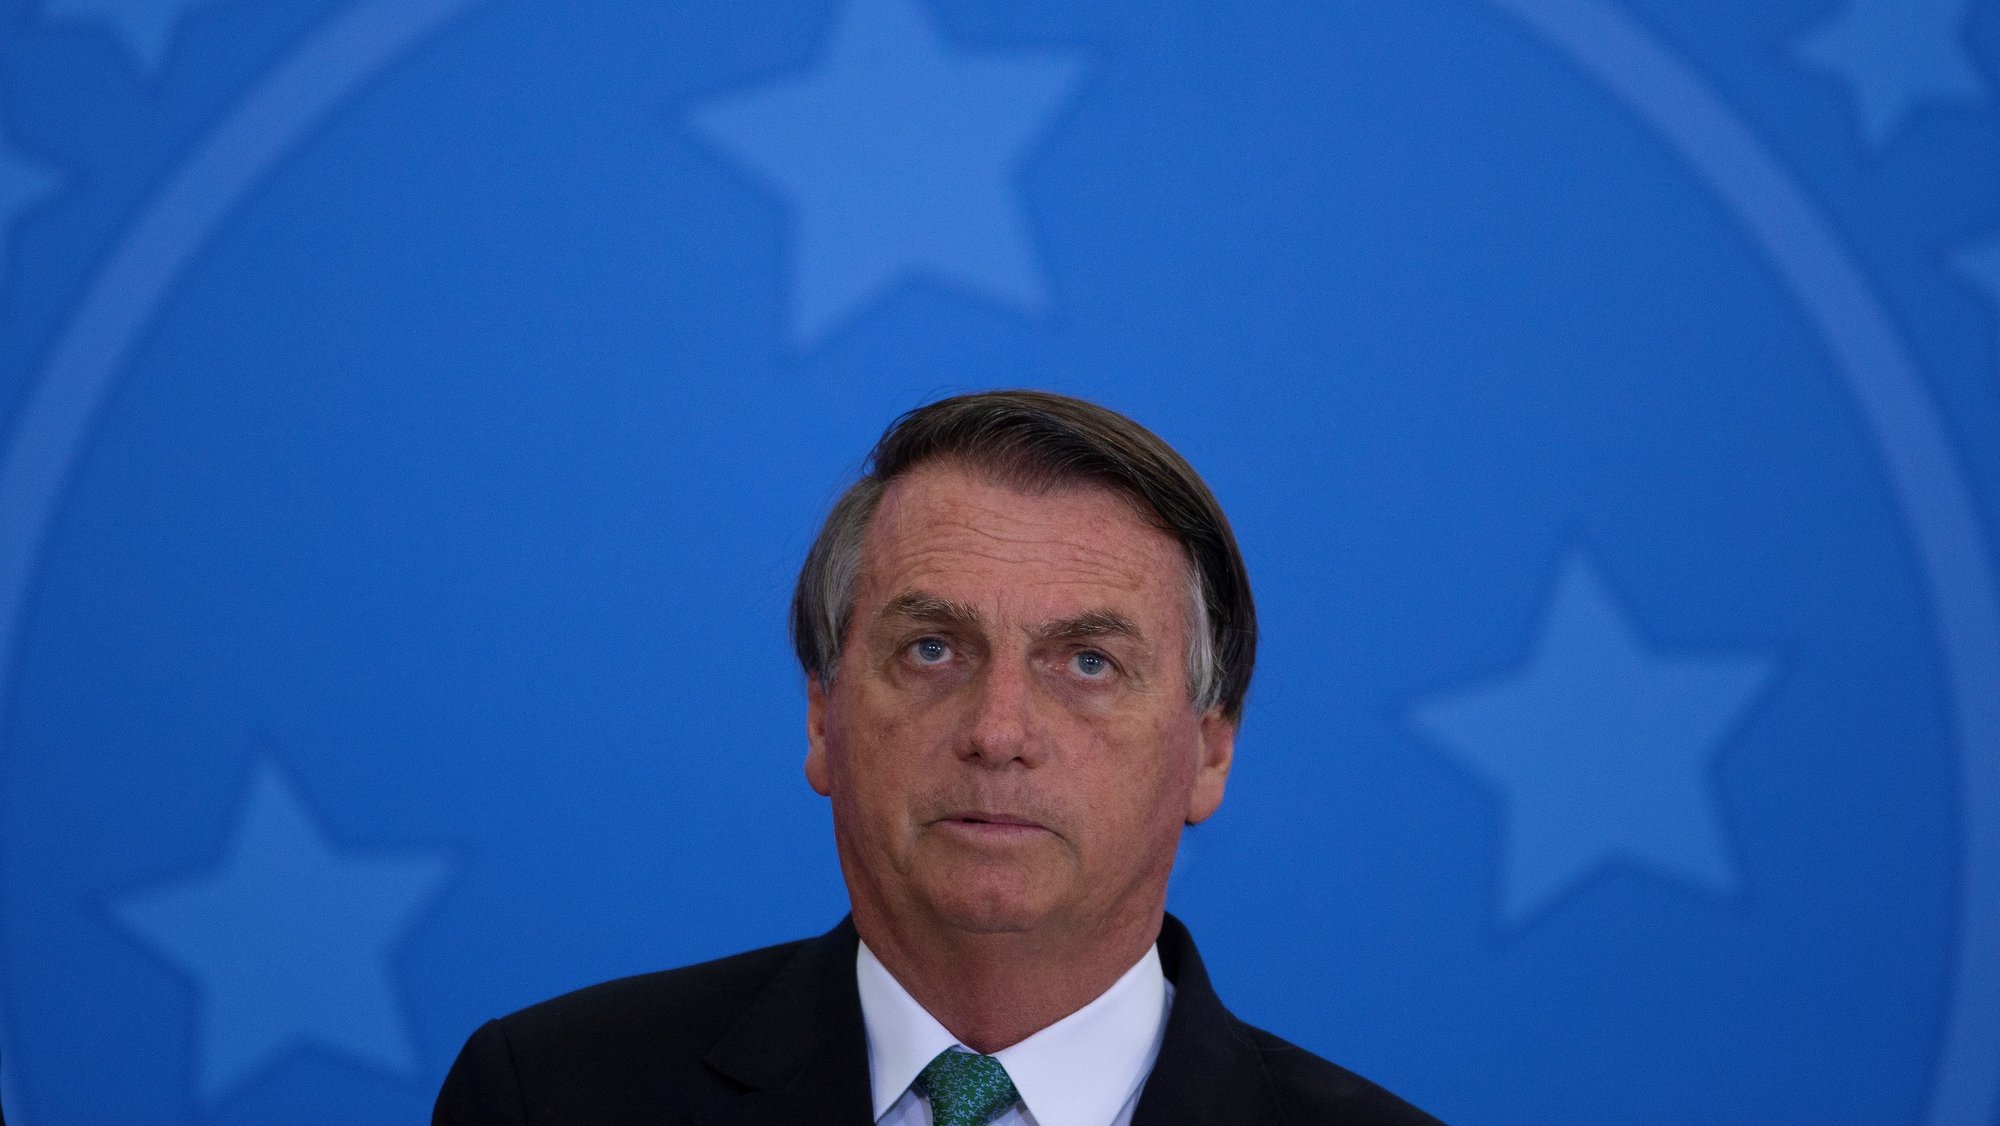 O Presidente do Brasil, Jair Bolsonaro